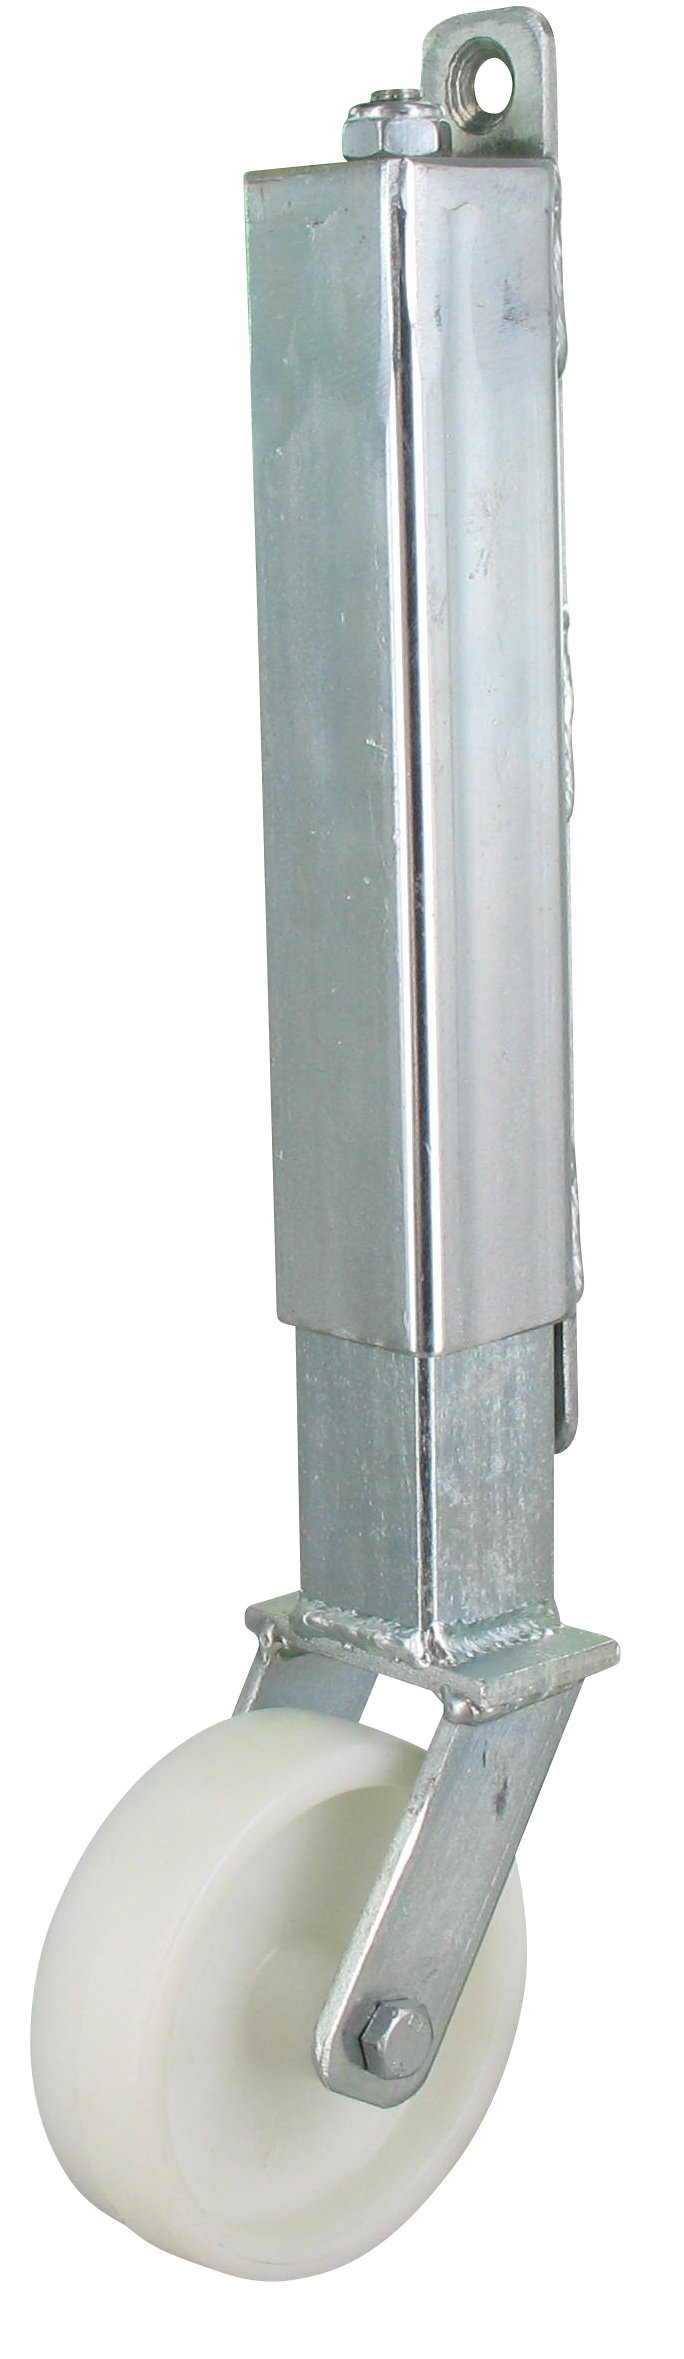 Torrolle KRN NBF Serie, Ø100x30mm, Stahl, geschweißt, natur, 70 KG Tragfähigkeit, 401011